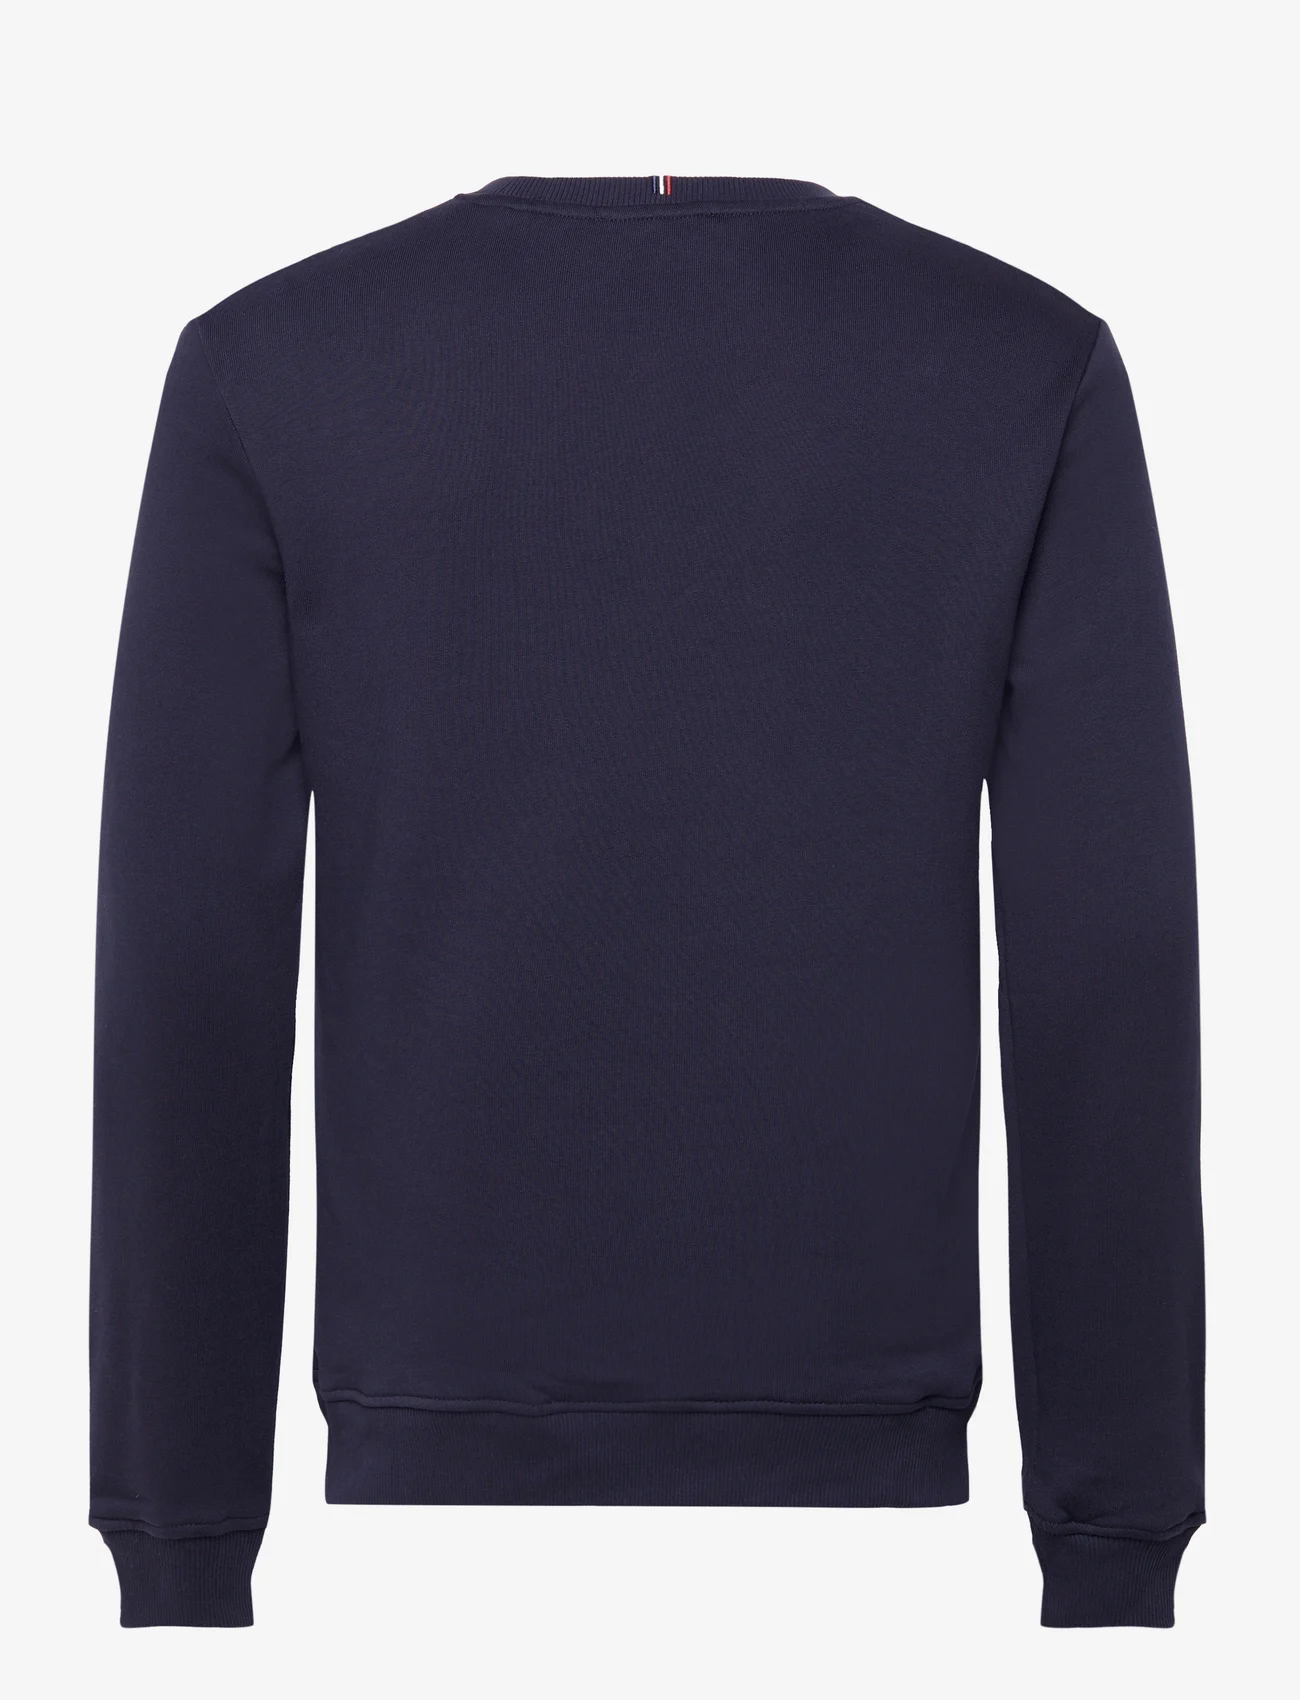 Les Deux - Les Deux II Sweatshirt 2.0 - sweatshirts - dark navy/platinum - 1